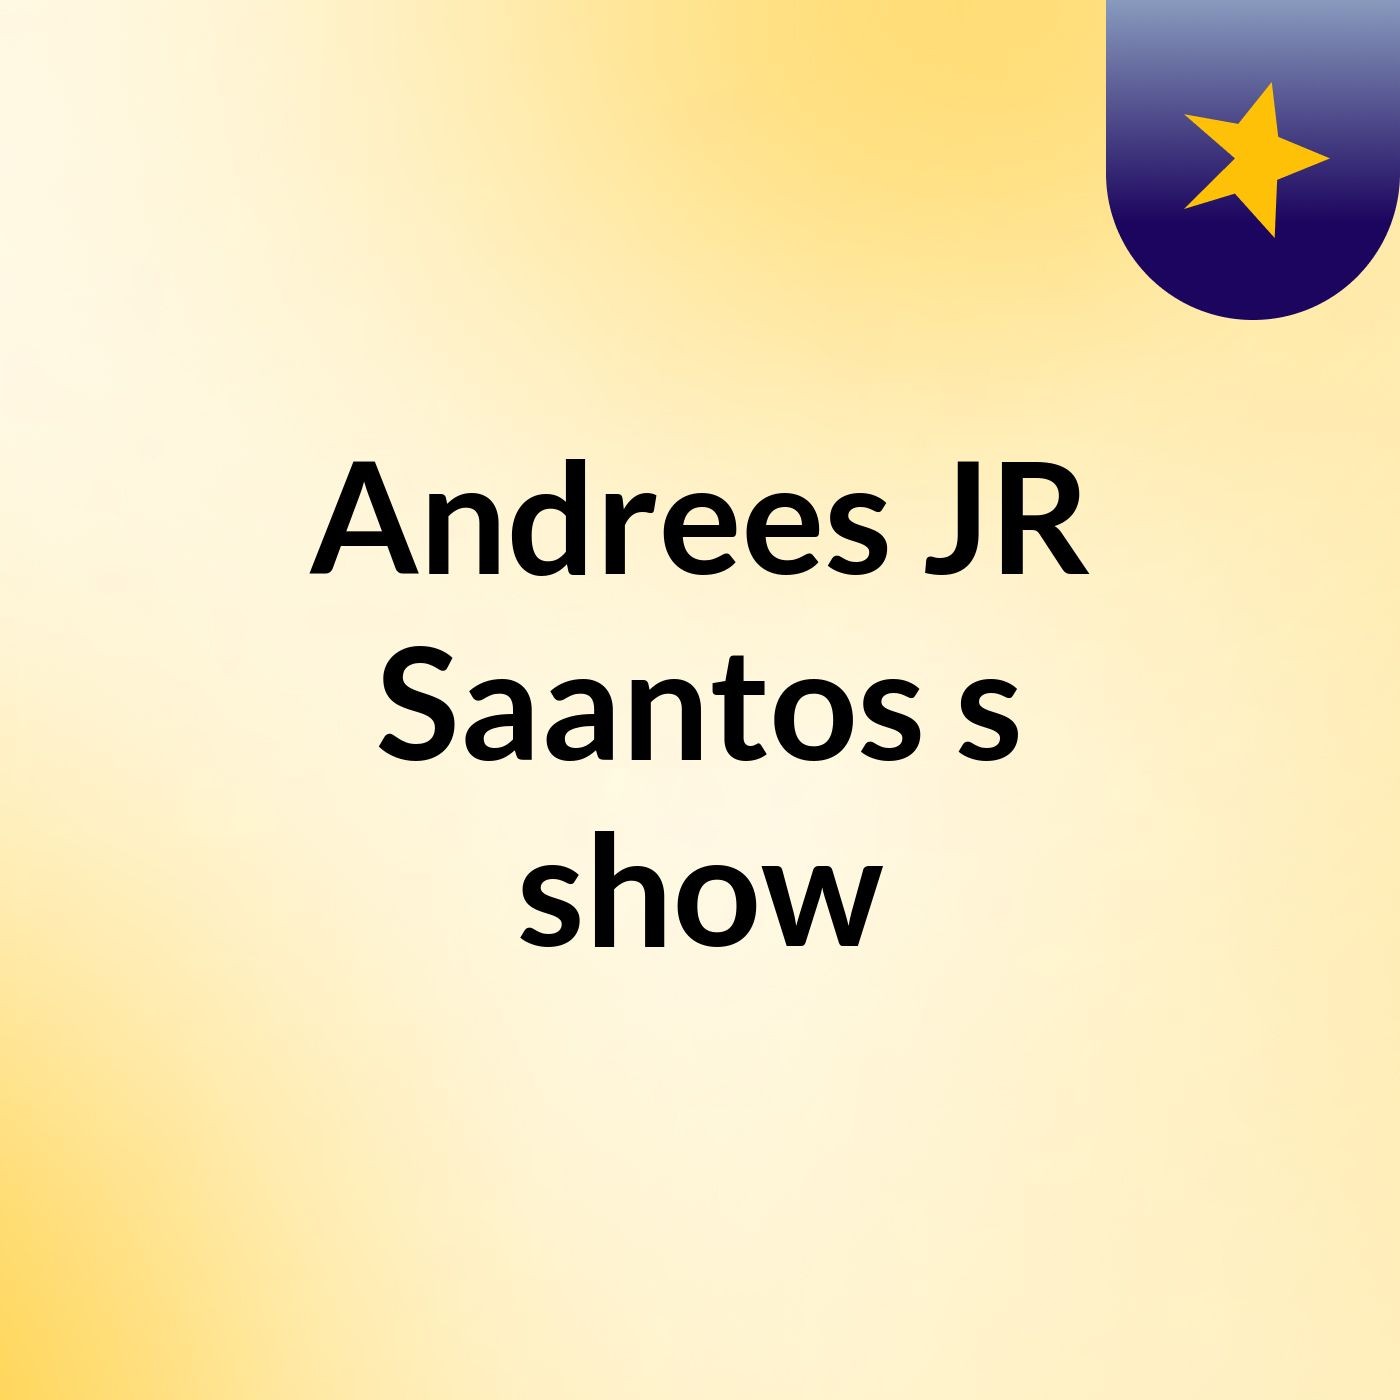 Andrees JR Saantos's show